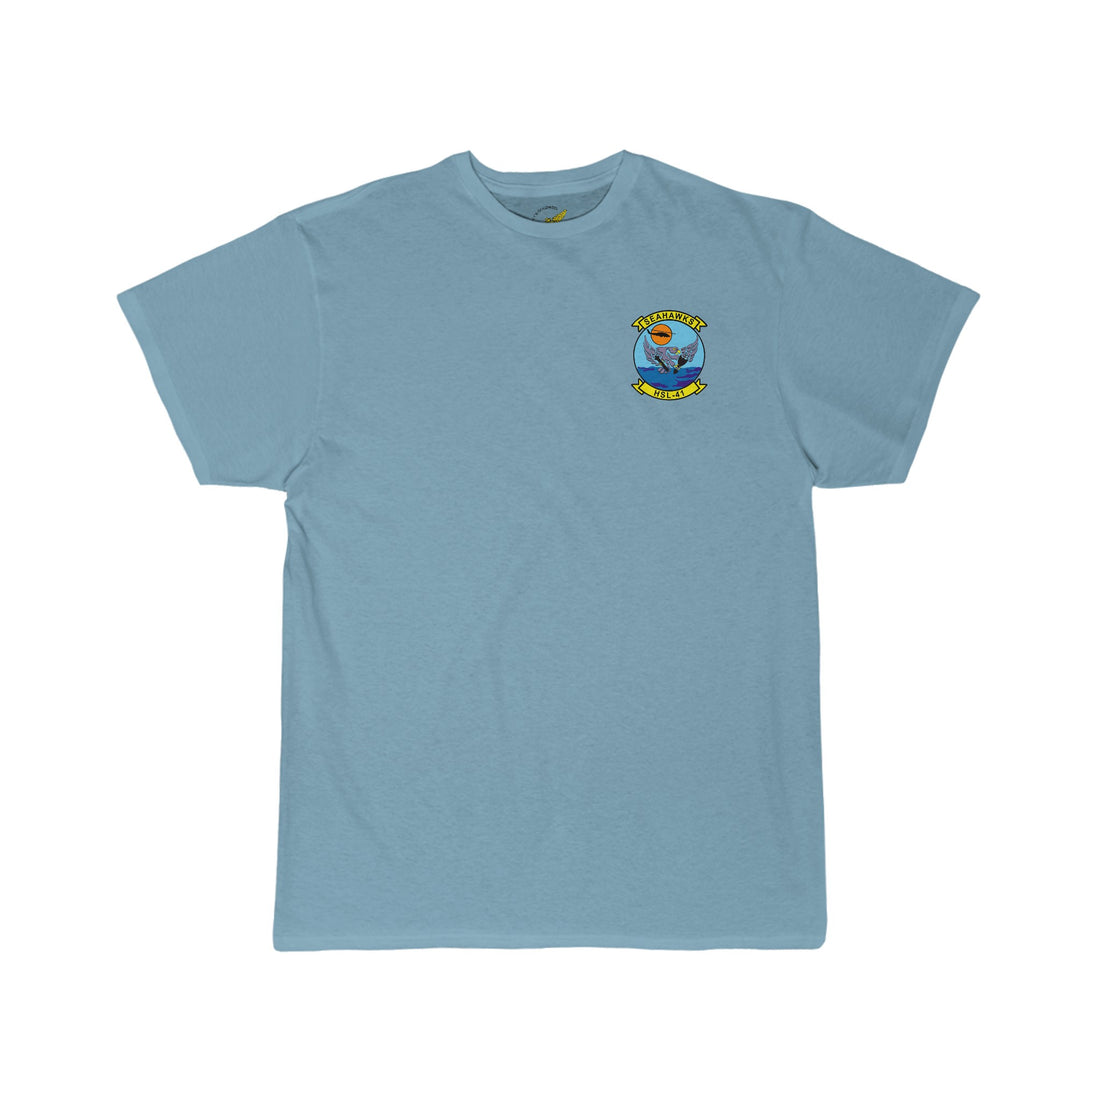 HSL-41 Seahawks T-Shirt